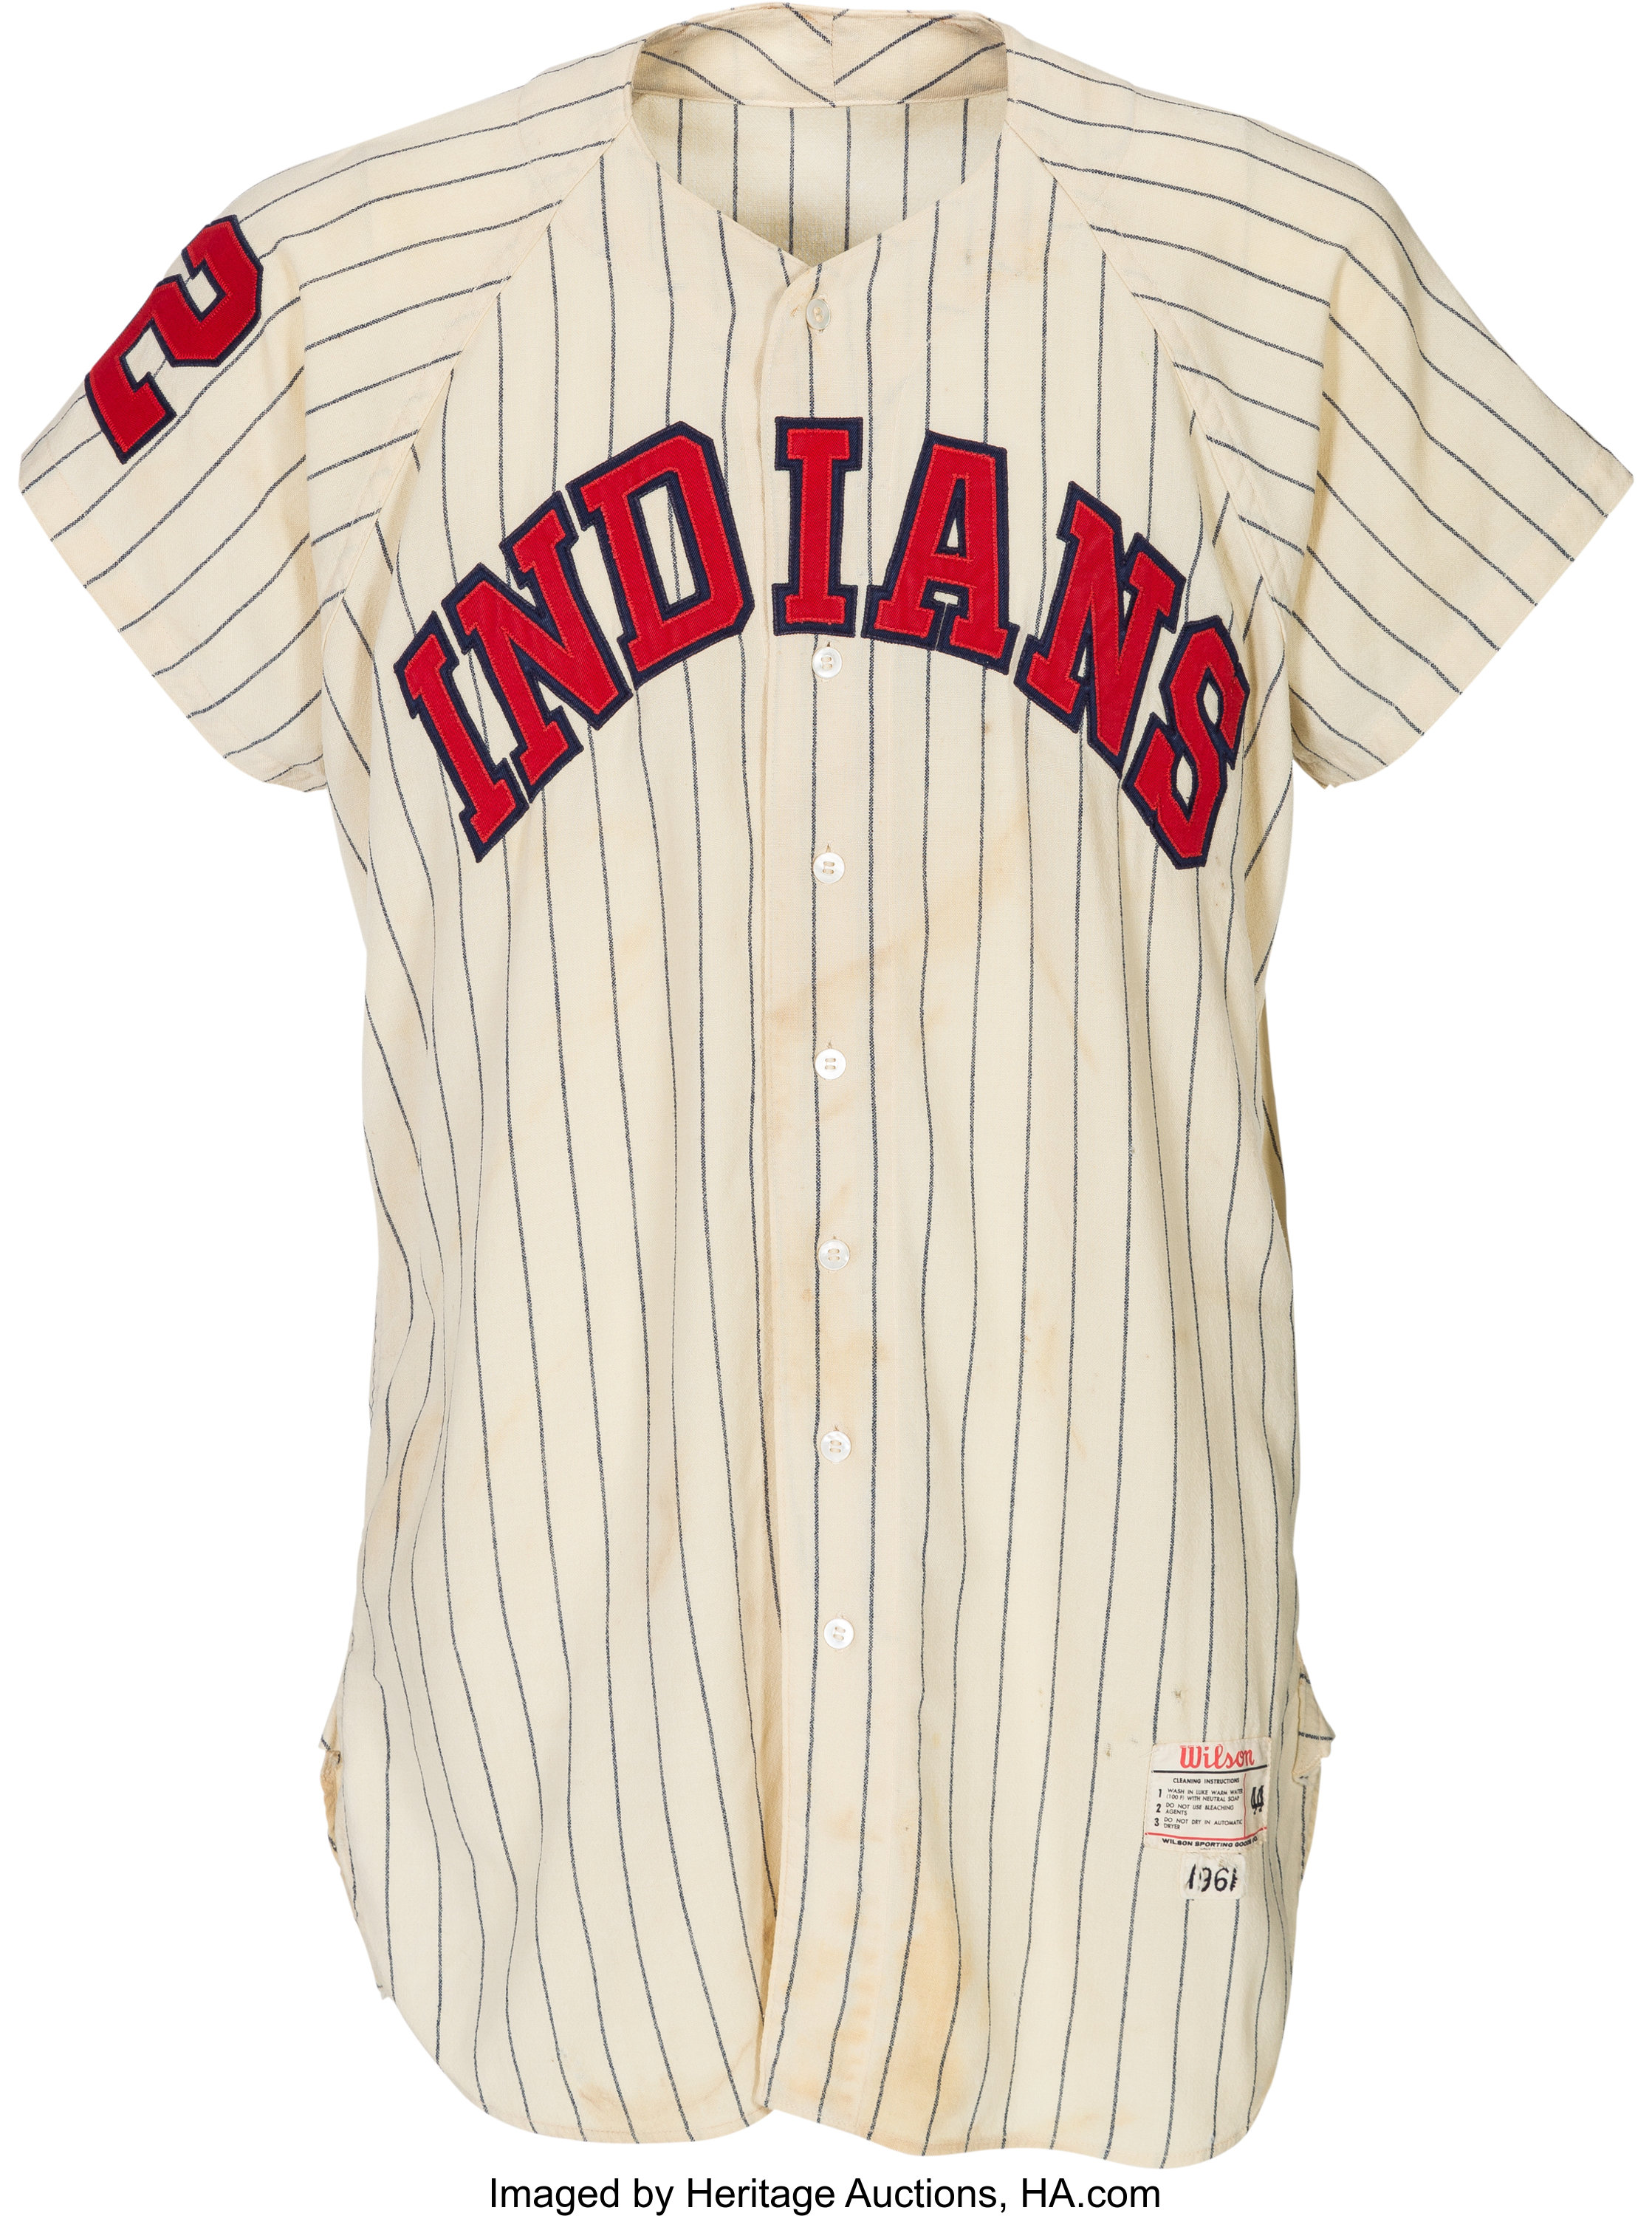 1961 Walter Bond Game Worn Cleveland Indians Rookie Jersey., Lot #81358